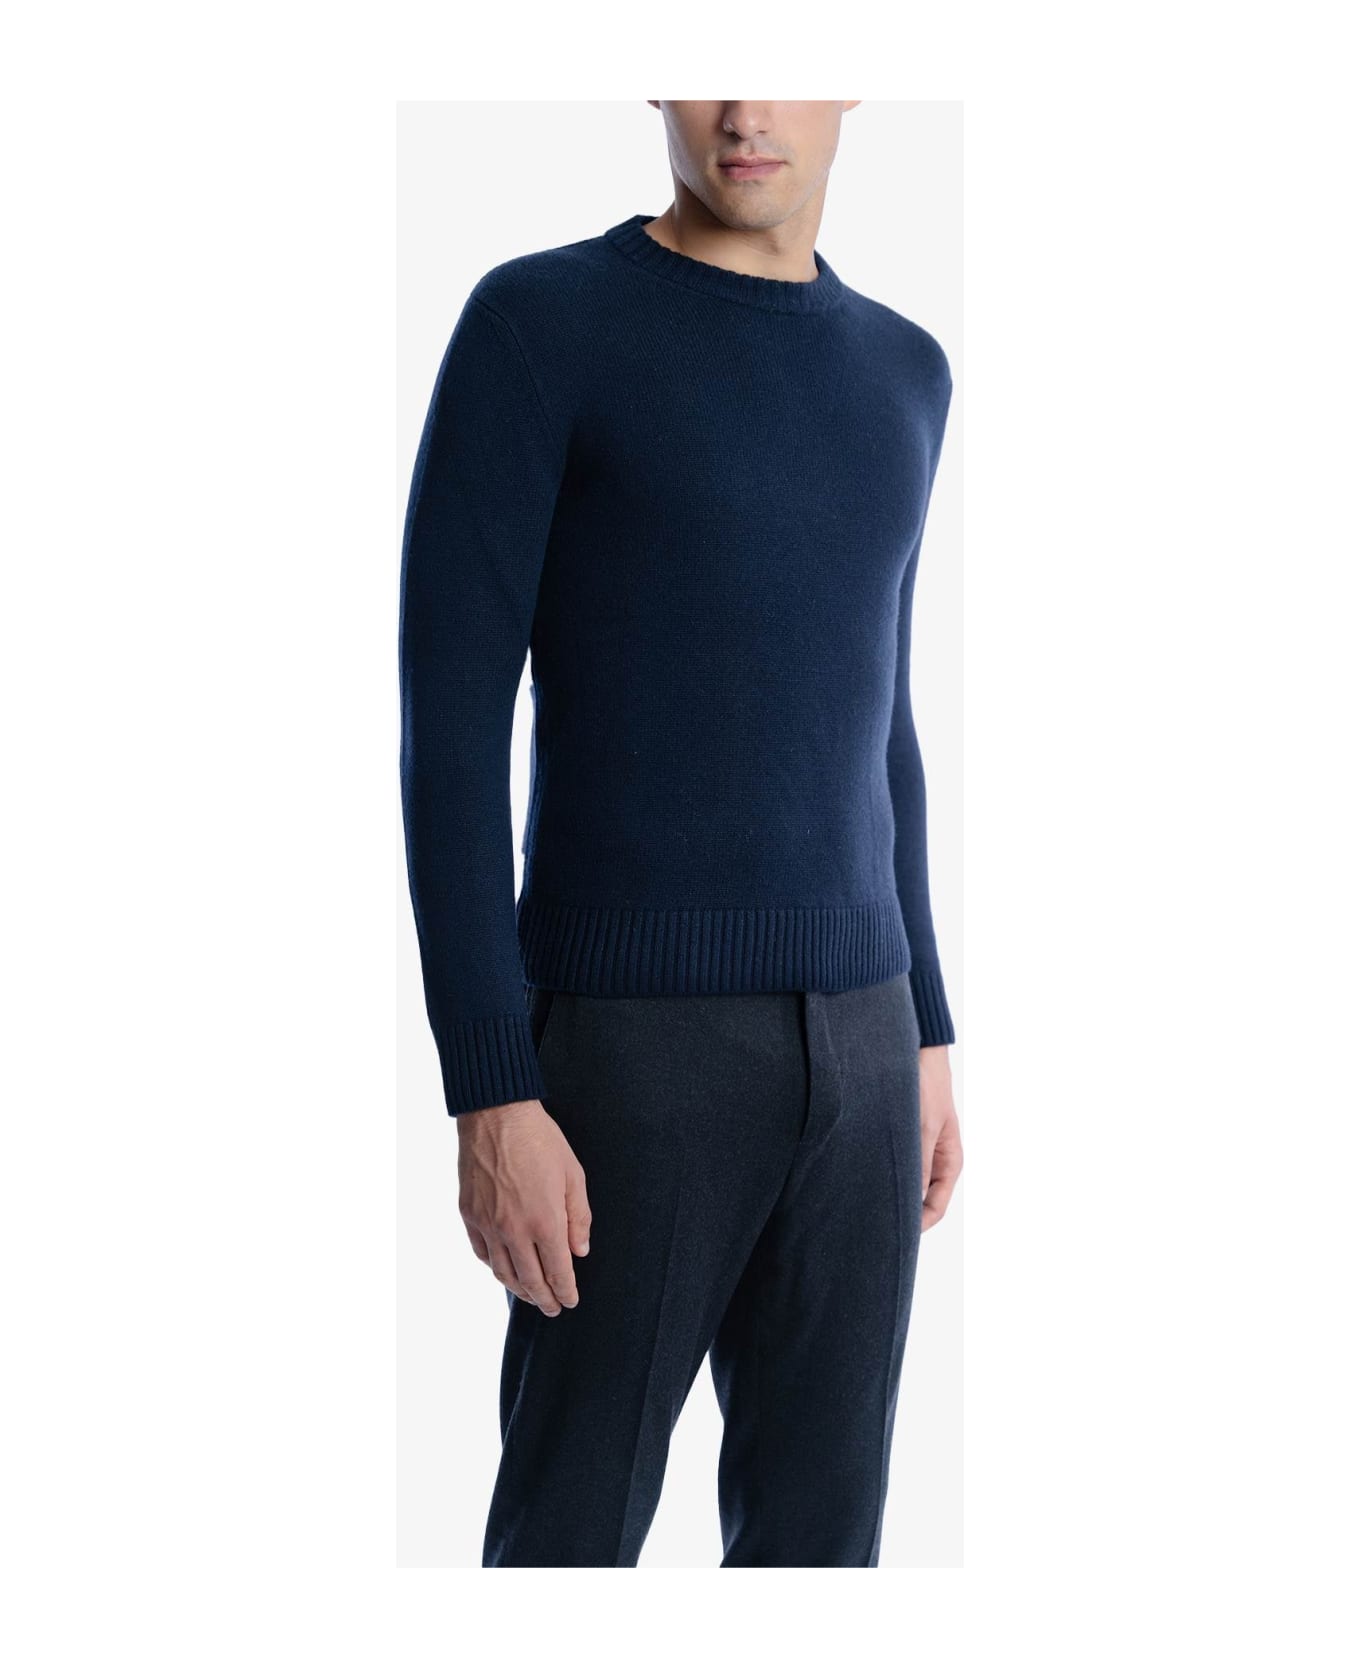 Larusmiani Crew Neck Sweater 'diablerets' Sweater - MidnightBlue